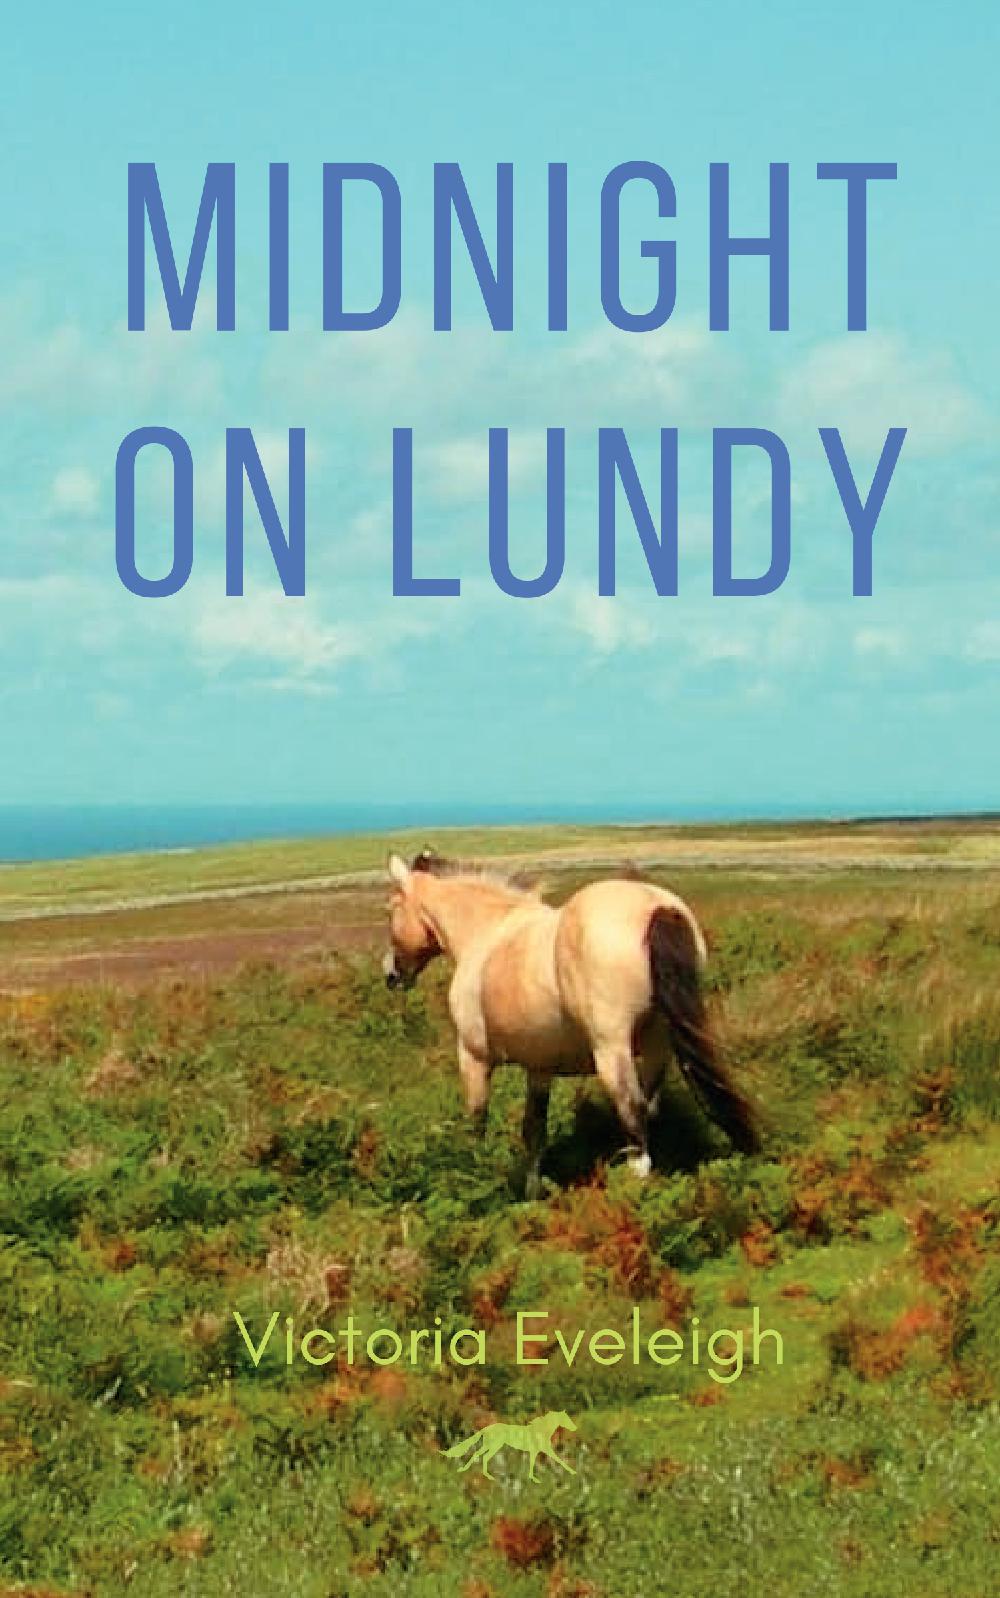 Victoria Eveleigh: Midnight on Lundy (paperback)